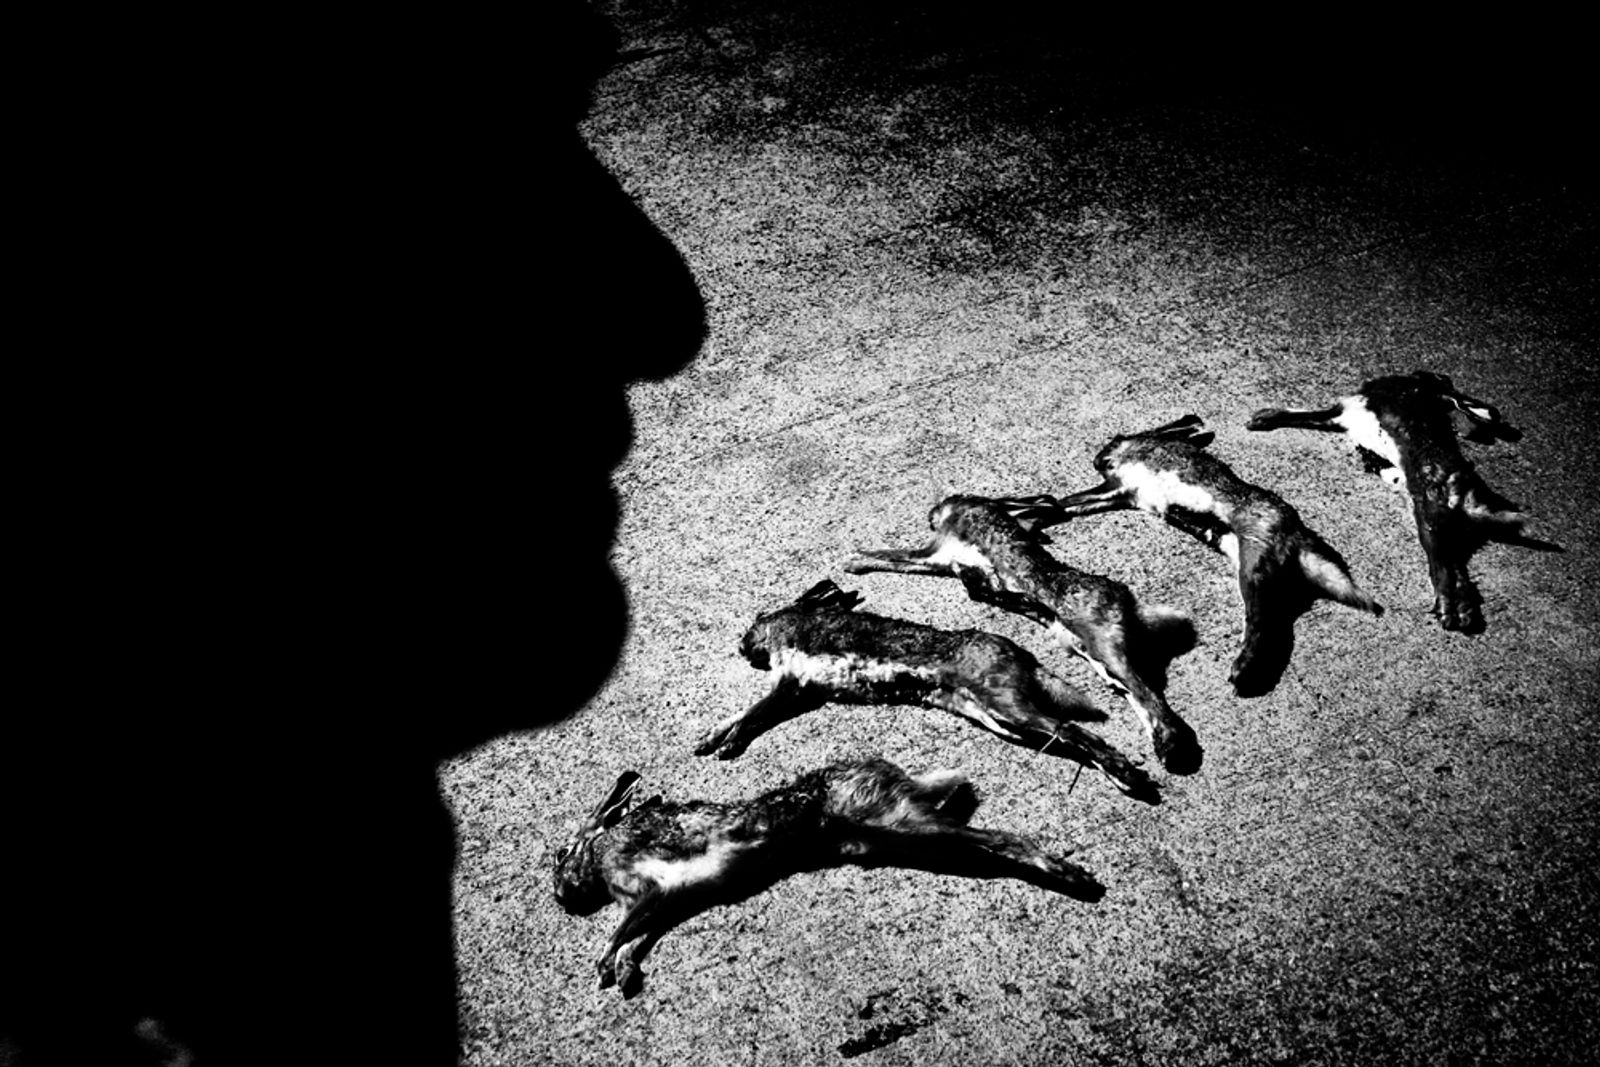 © Antonio González Caro, from the series Hunting Shadows